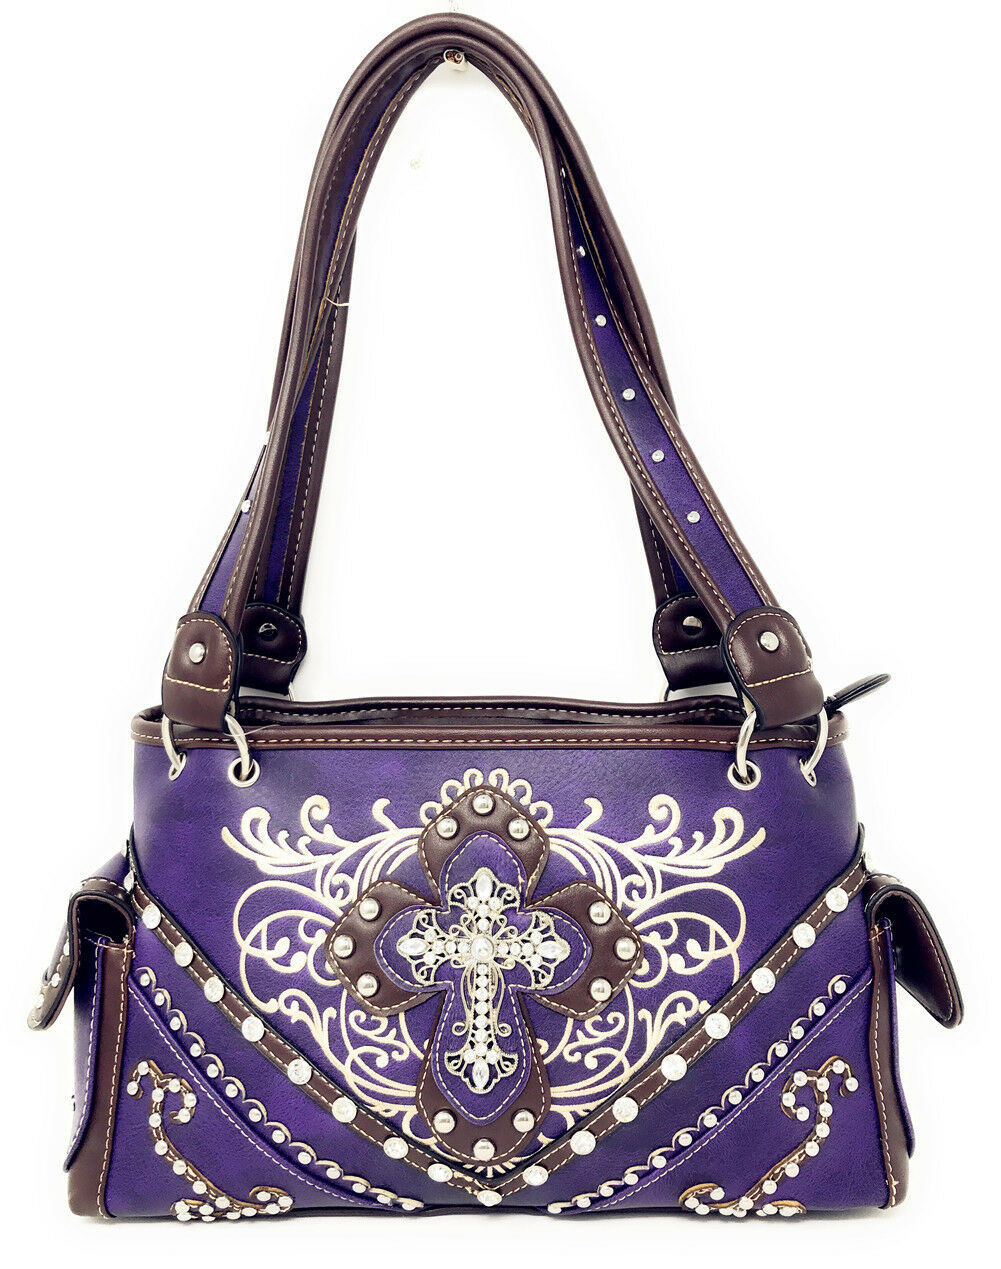 Premium Rhinestone Cross Western Floral Embroidery Concealed Carry Handbag Purse